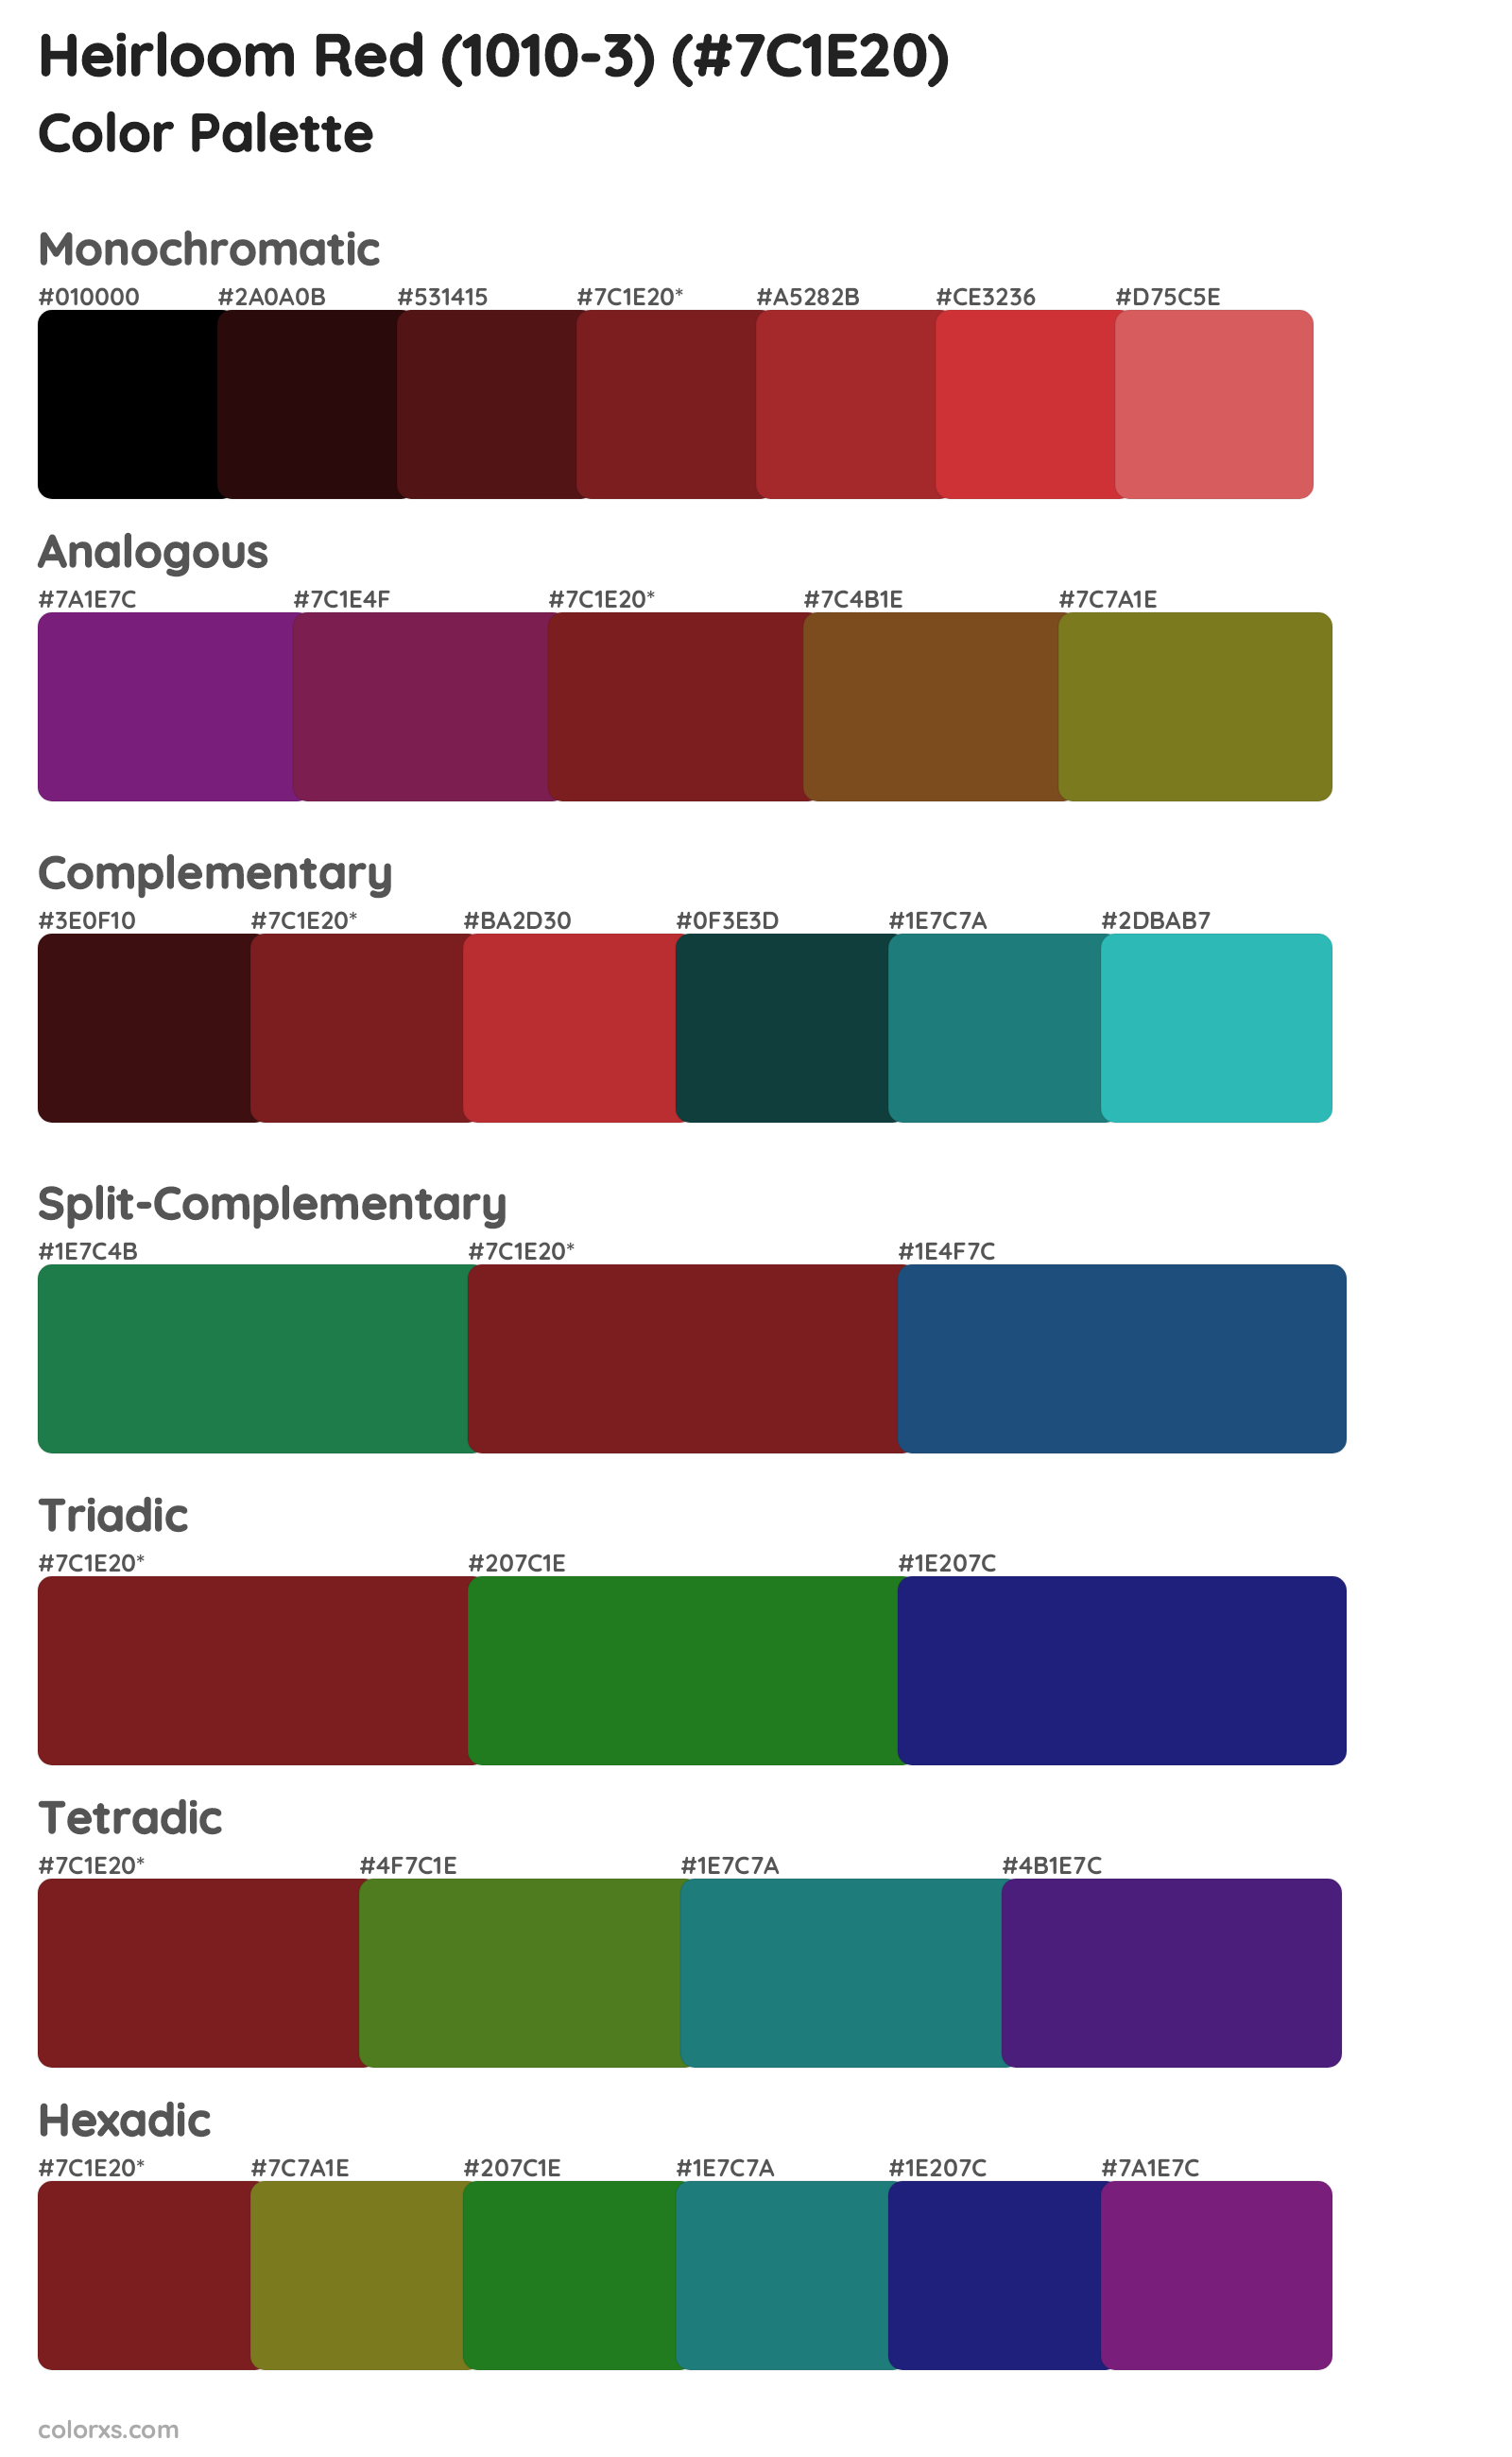 Heirloom Red (1010-3) Color Scheme Palettes